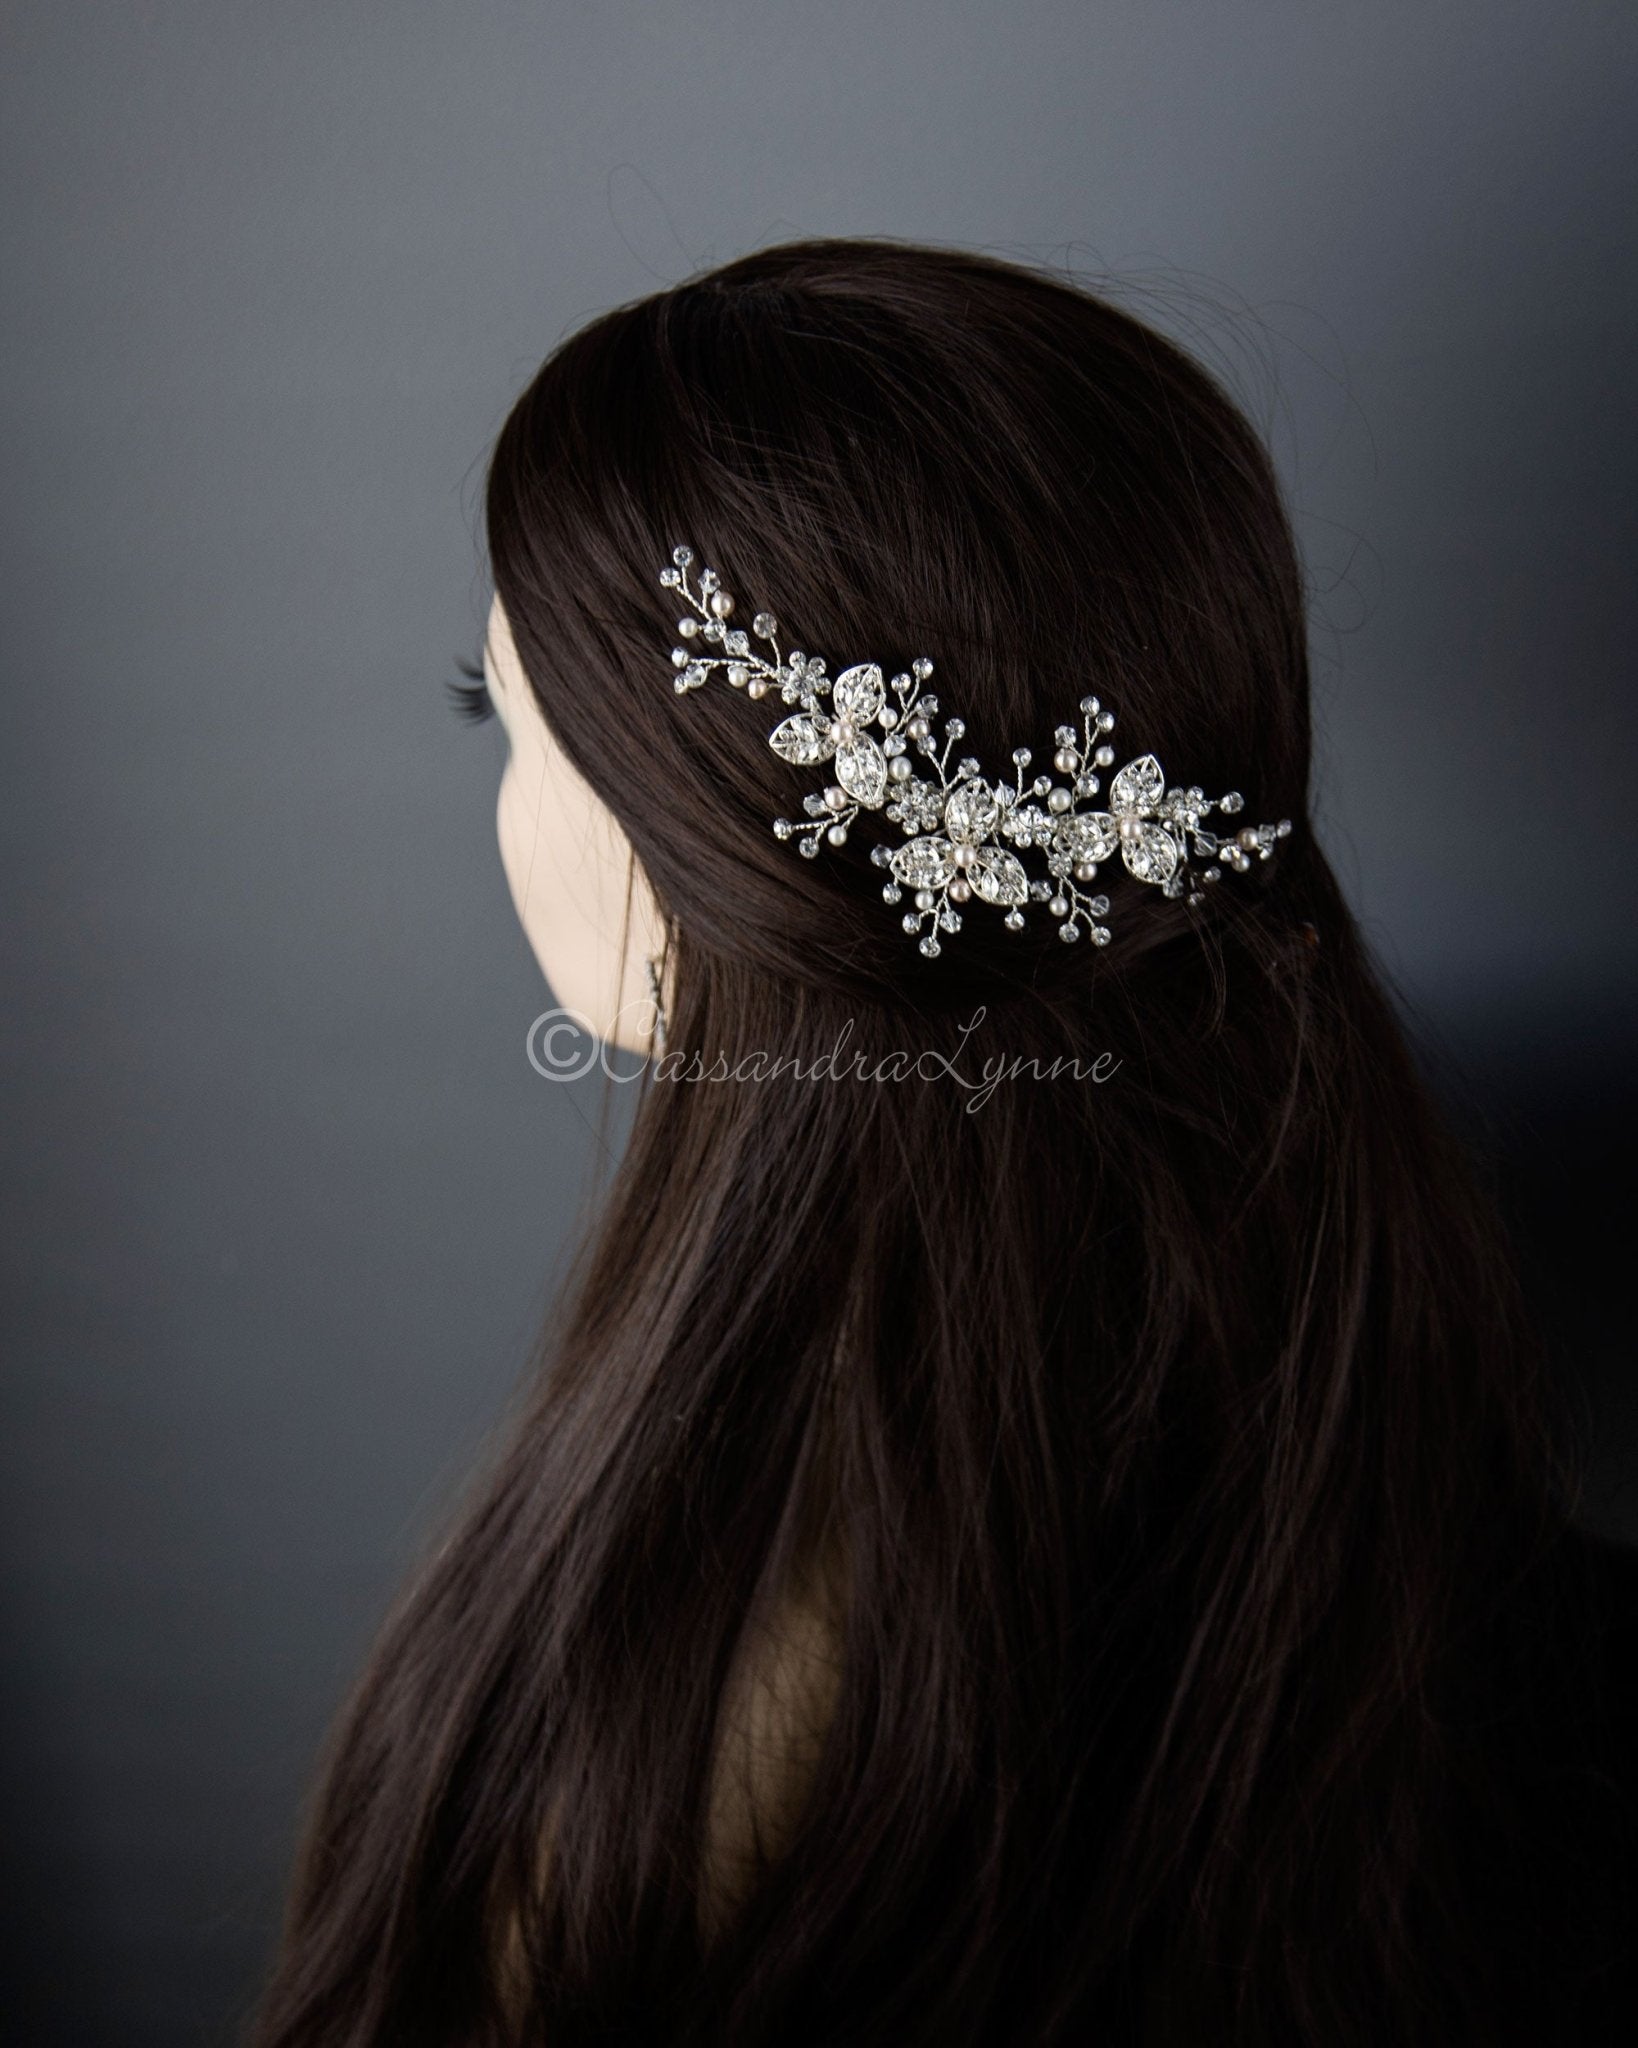 Filigree Flowers and Blush Pearls Hair Comb - Cassandra Lynne